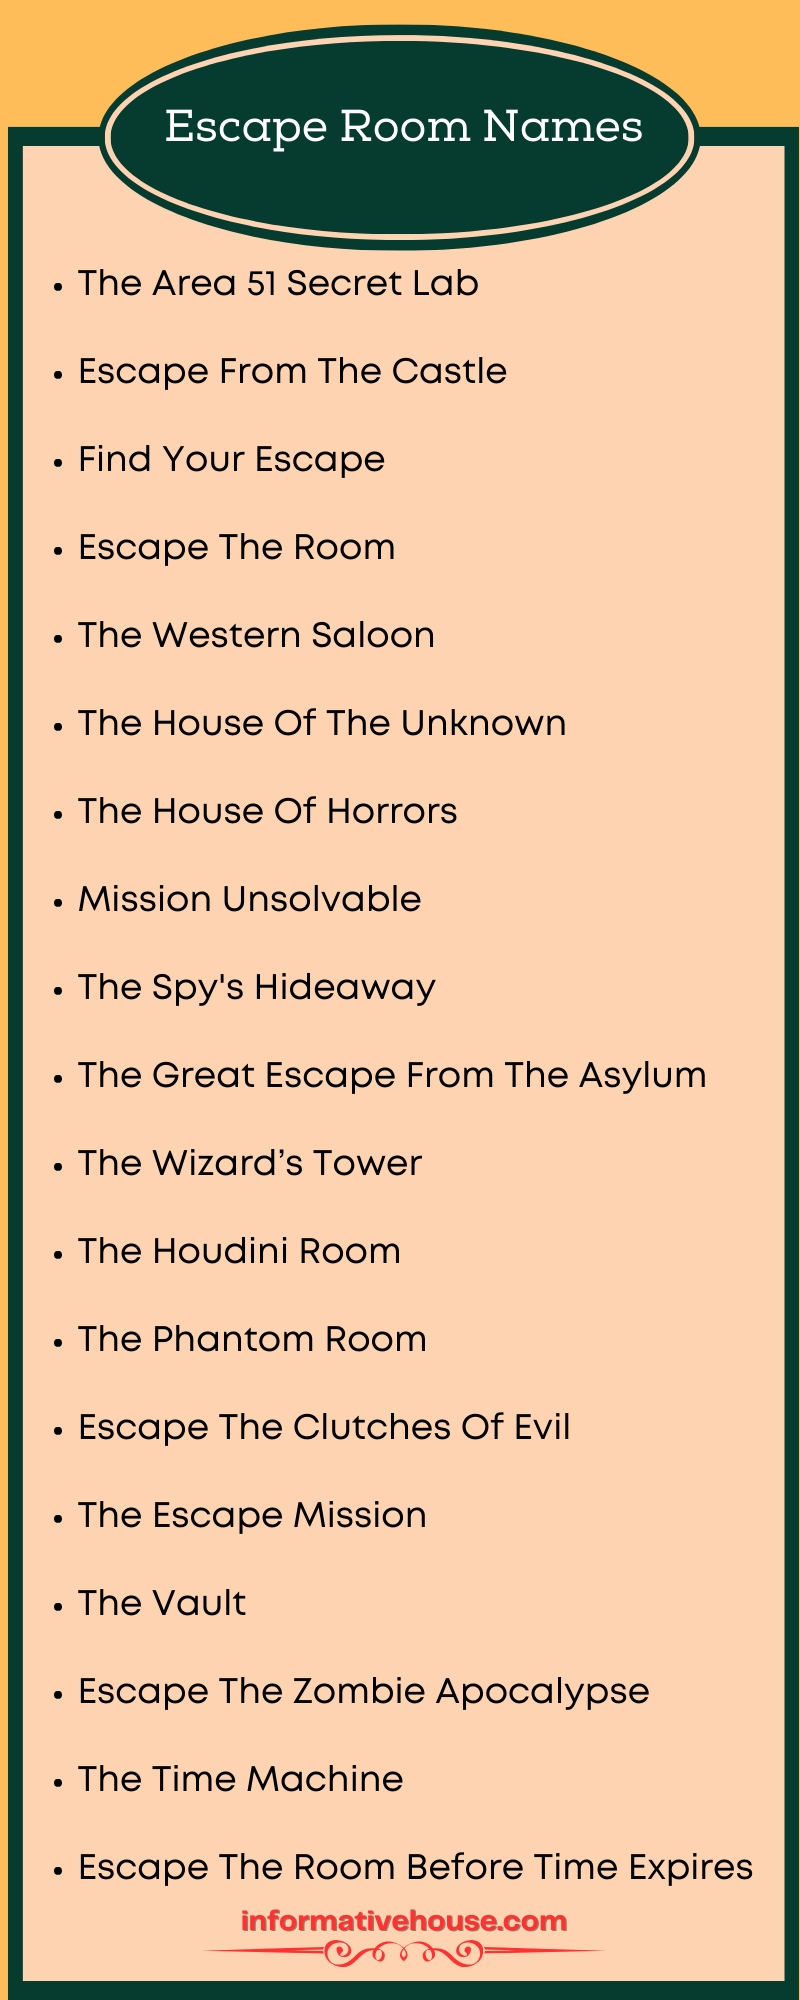 Funny Escape Room Team Names